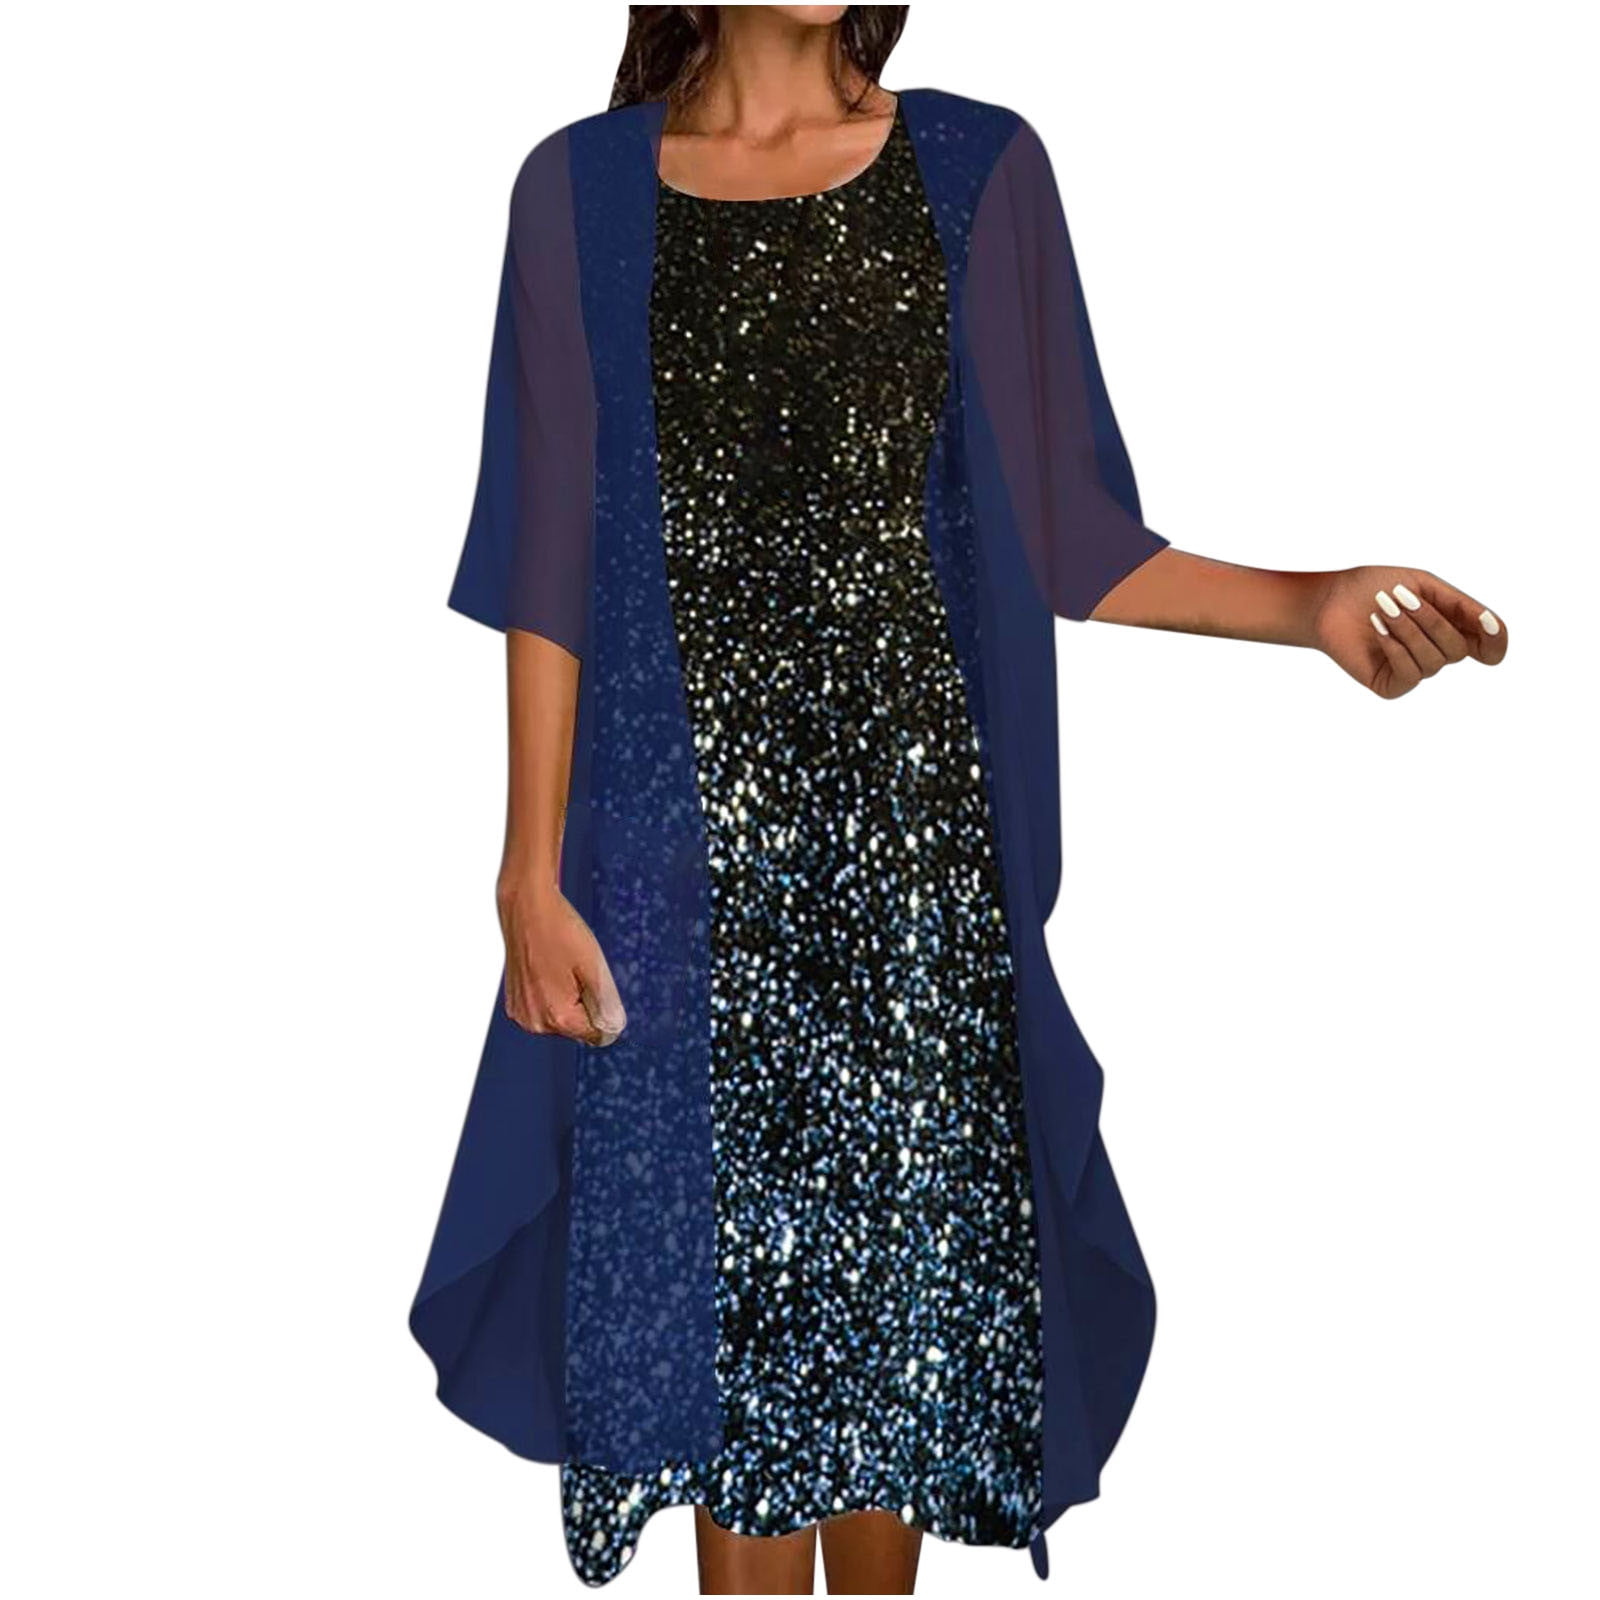 DTBPRQ Women's Plus Size Dress 3/4 Sleeve V Neck Chiffon Contrast Panel ...